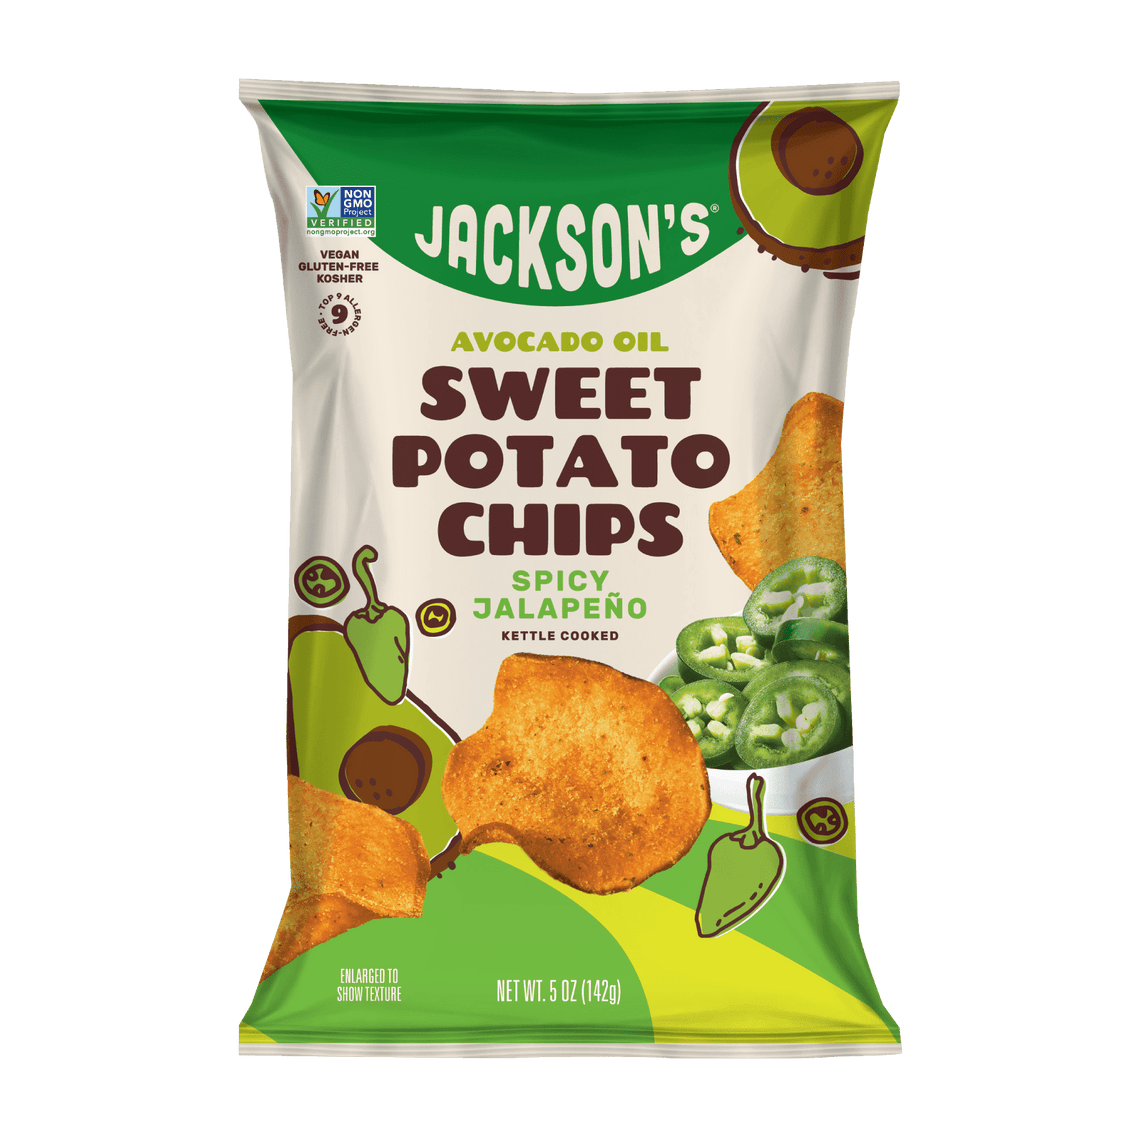 Spicy Jalapeño Sweet Potato Chips in Avocado Oil 5oz. Paleo and Gluten-Free